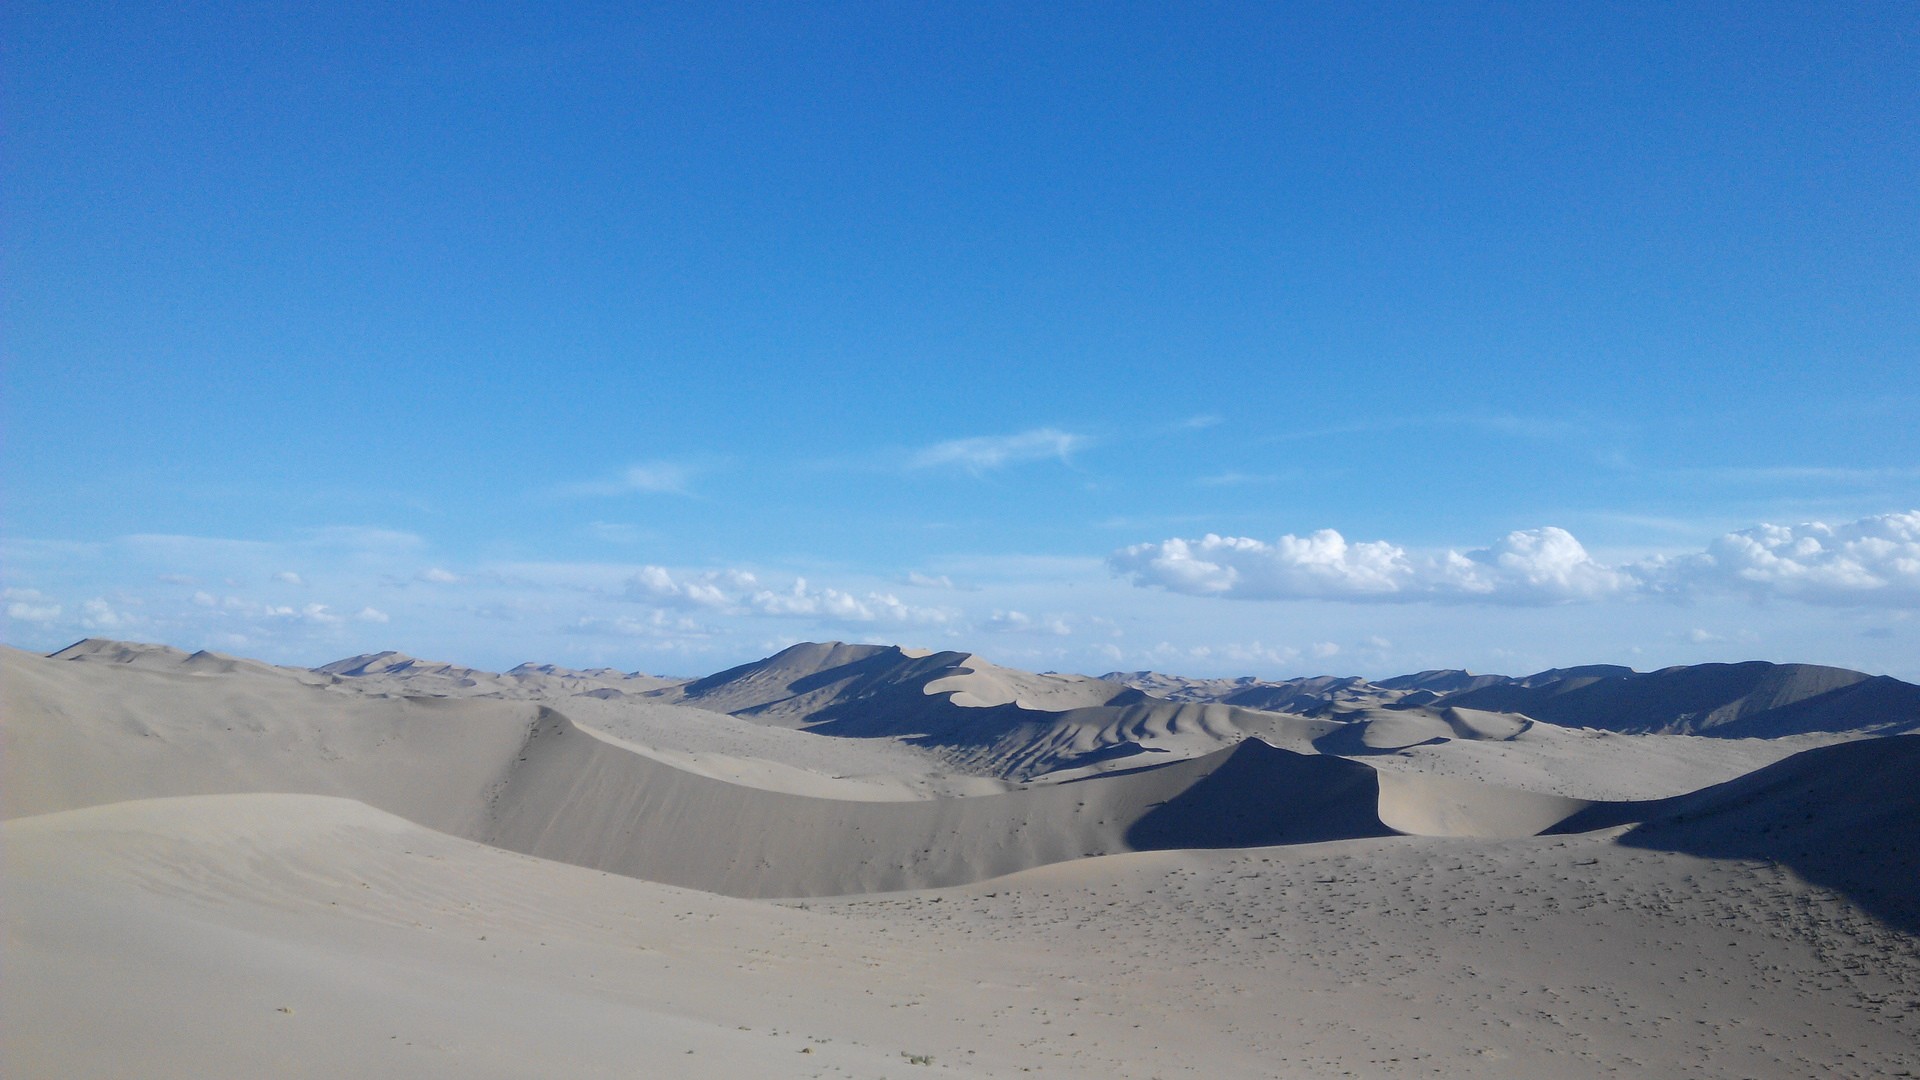 General 1920x1080 desert landscape dunes sand nature sky outdoors